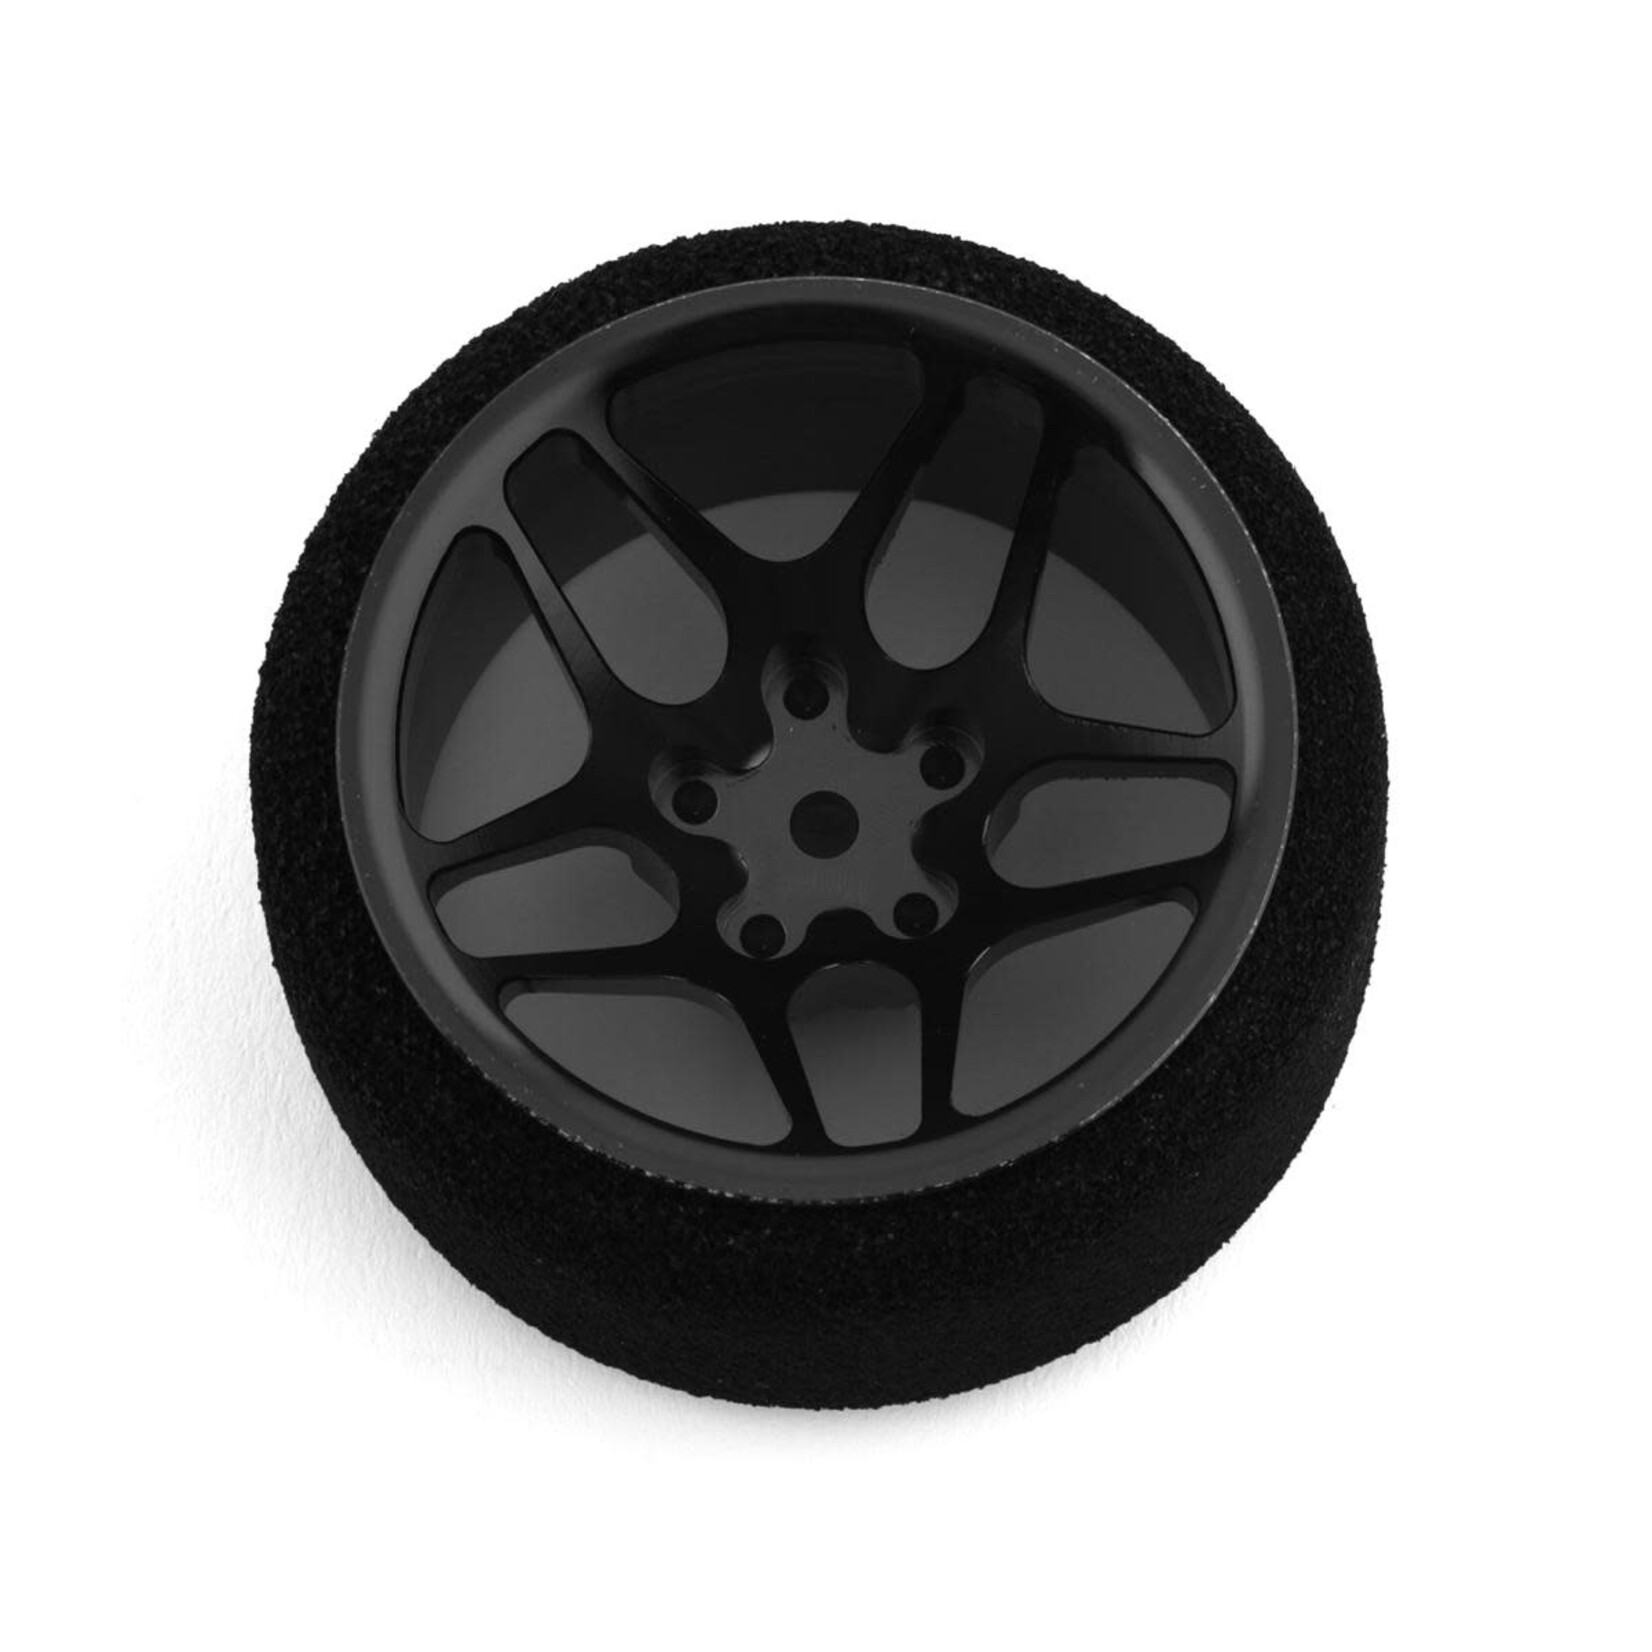 R-Design R-Design Sanwa M12/Flysky NB4 10-Spoke Ultrawide Steering Wheel (Black) #RDD7211